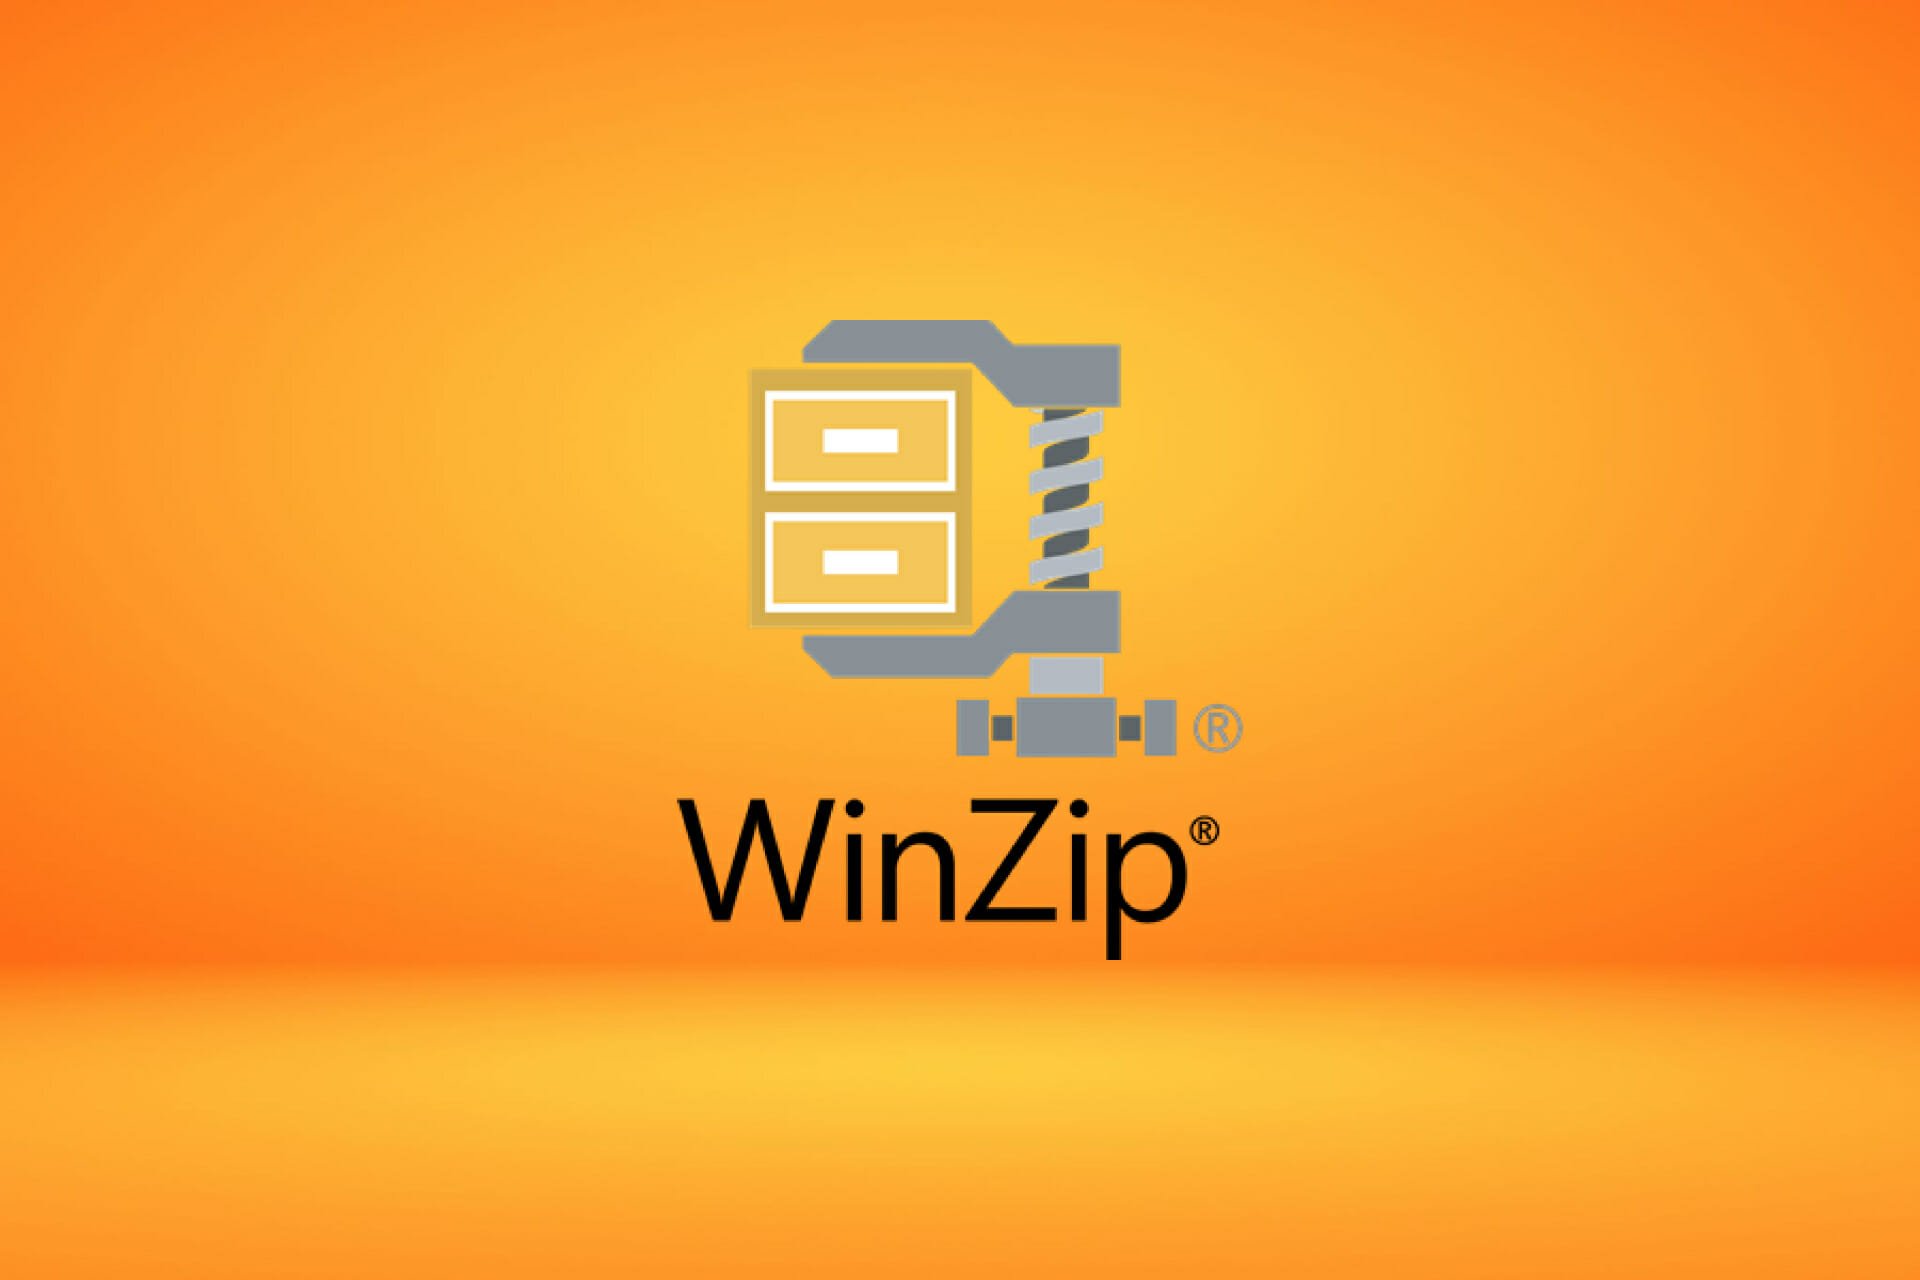 Winzip free trial code